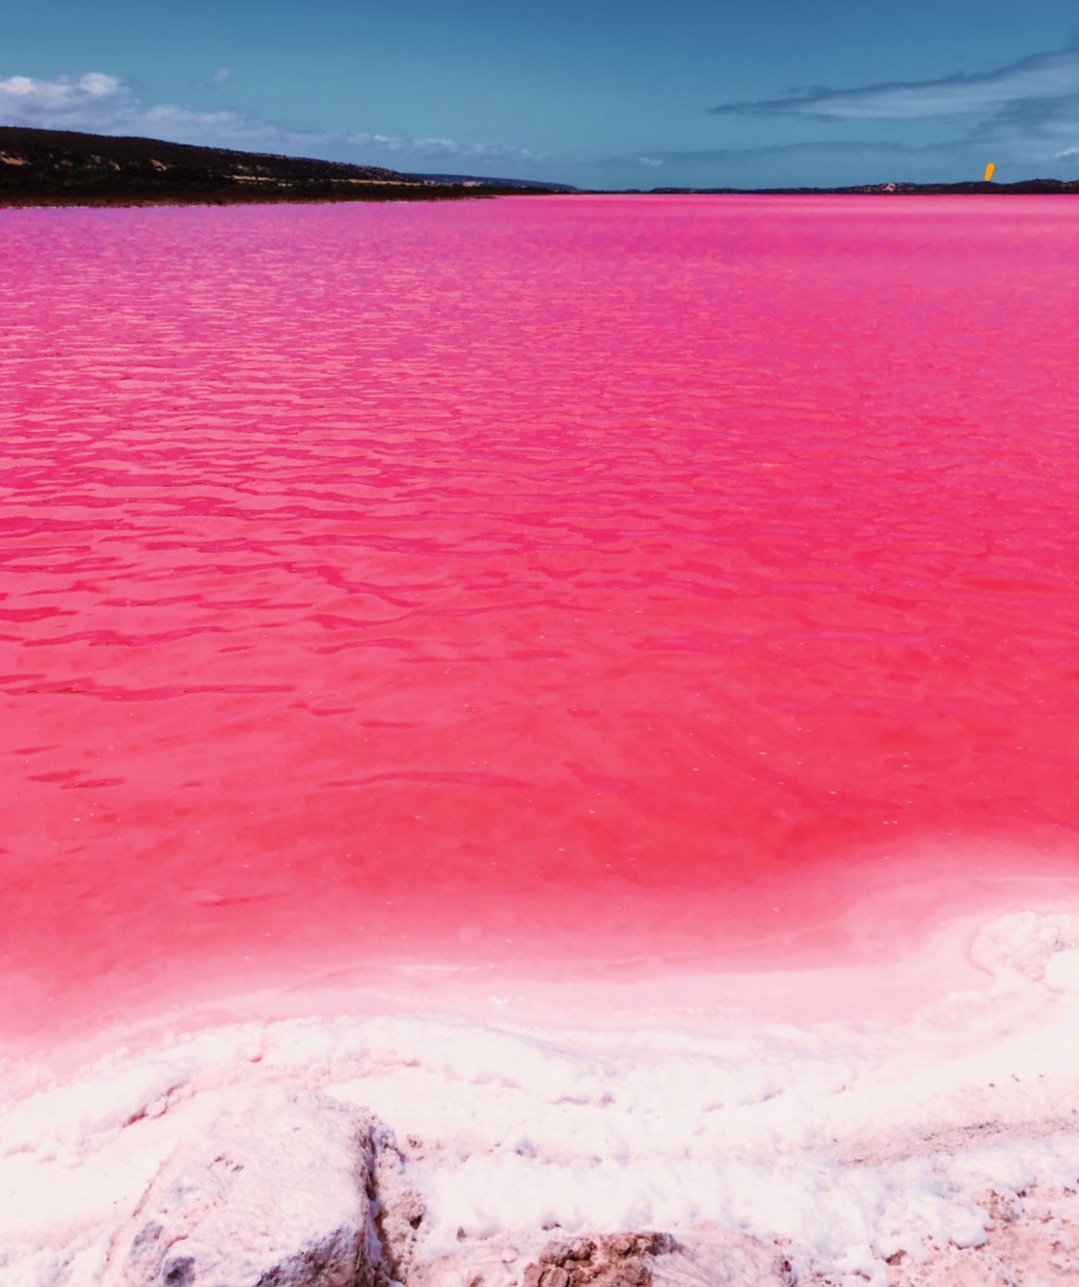 Есть розовое озеро. Розовое озеро Хиллер Австралия. Озеро Ретба. Озеро Хиллер (остров Миддл). Озеро Лагуна Хатт Австралия.